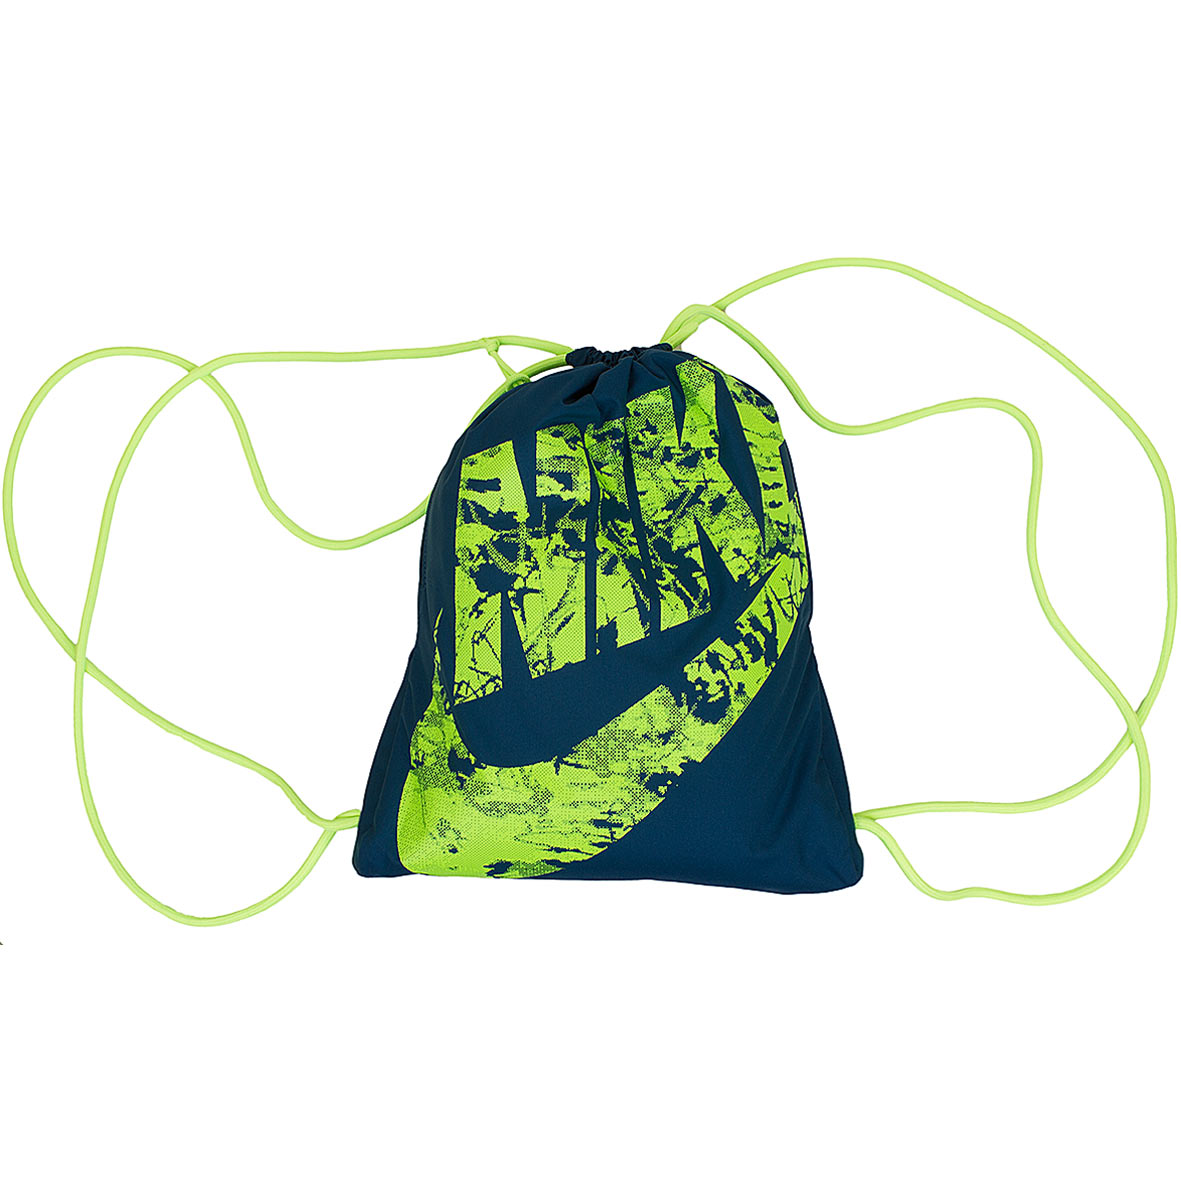 ☆ Nike Gym Bag Heritage Gym blau/grün - hier bestellen!